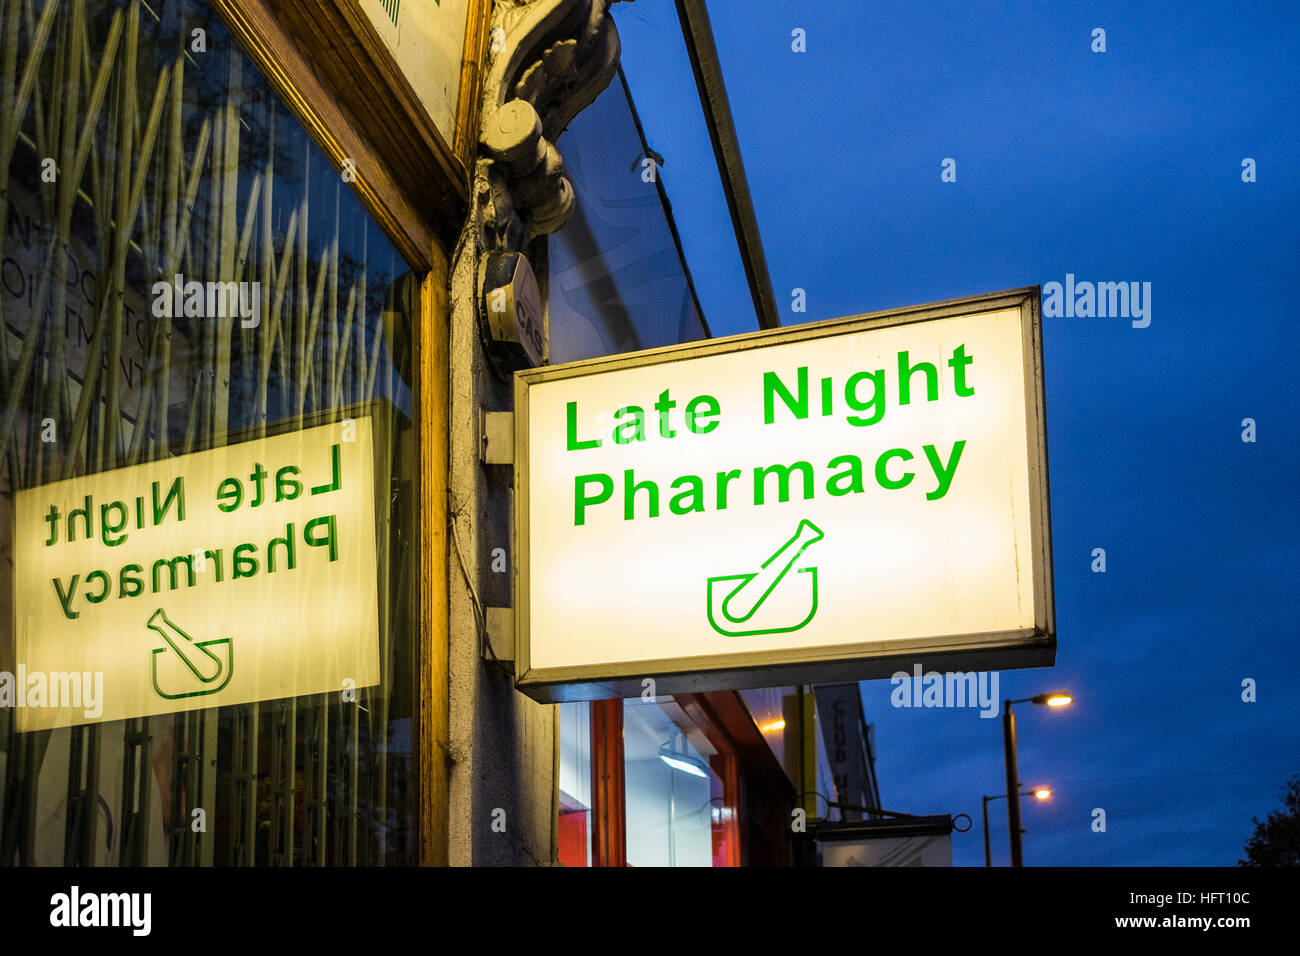 Late Night Pharmacy sign, London, England, U.K. Stock Photo